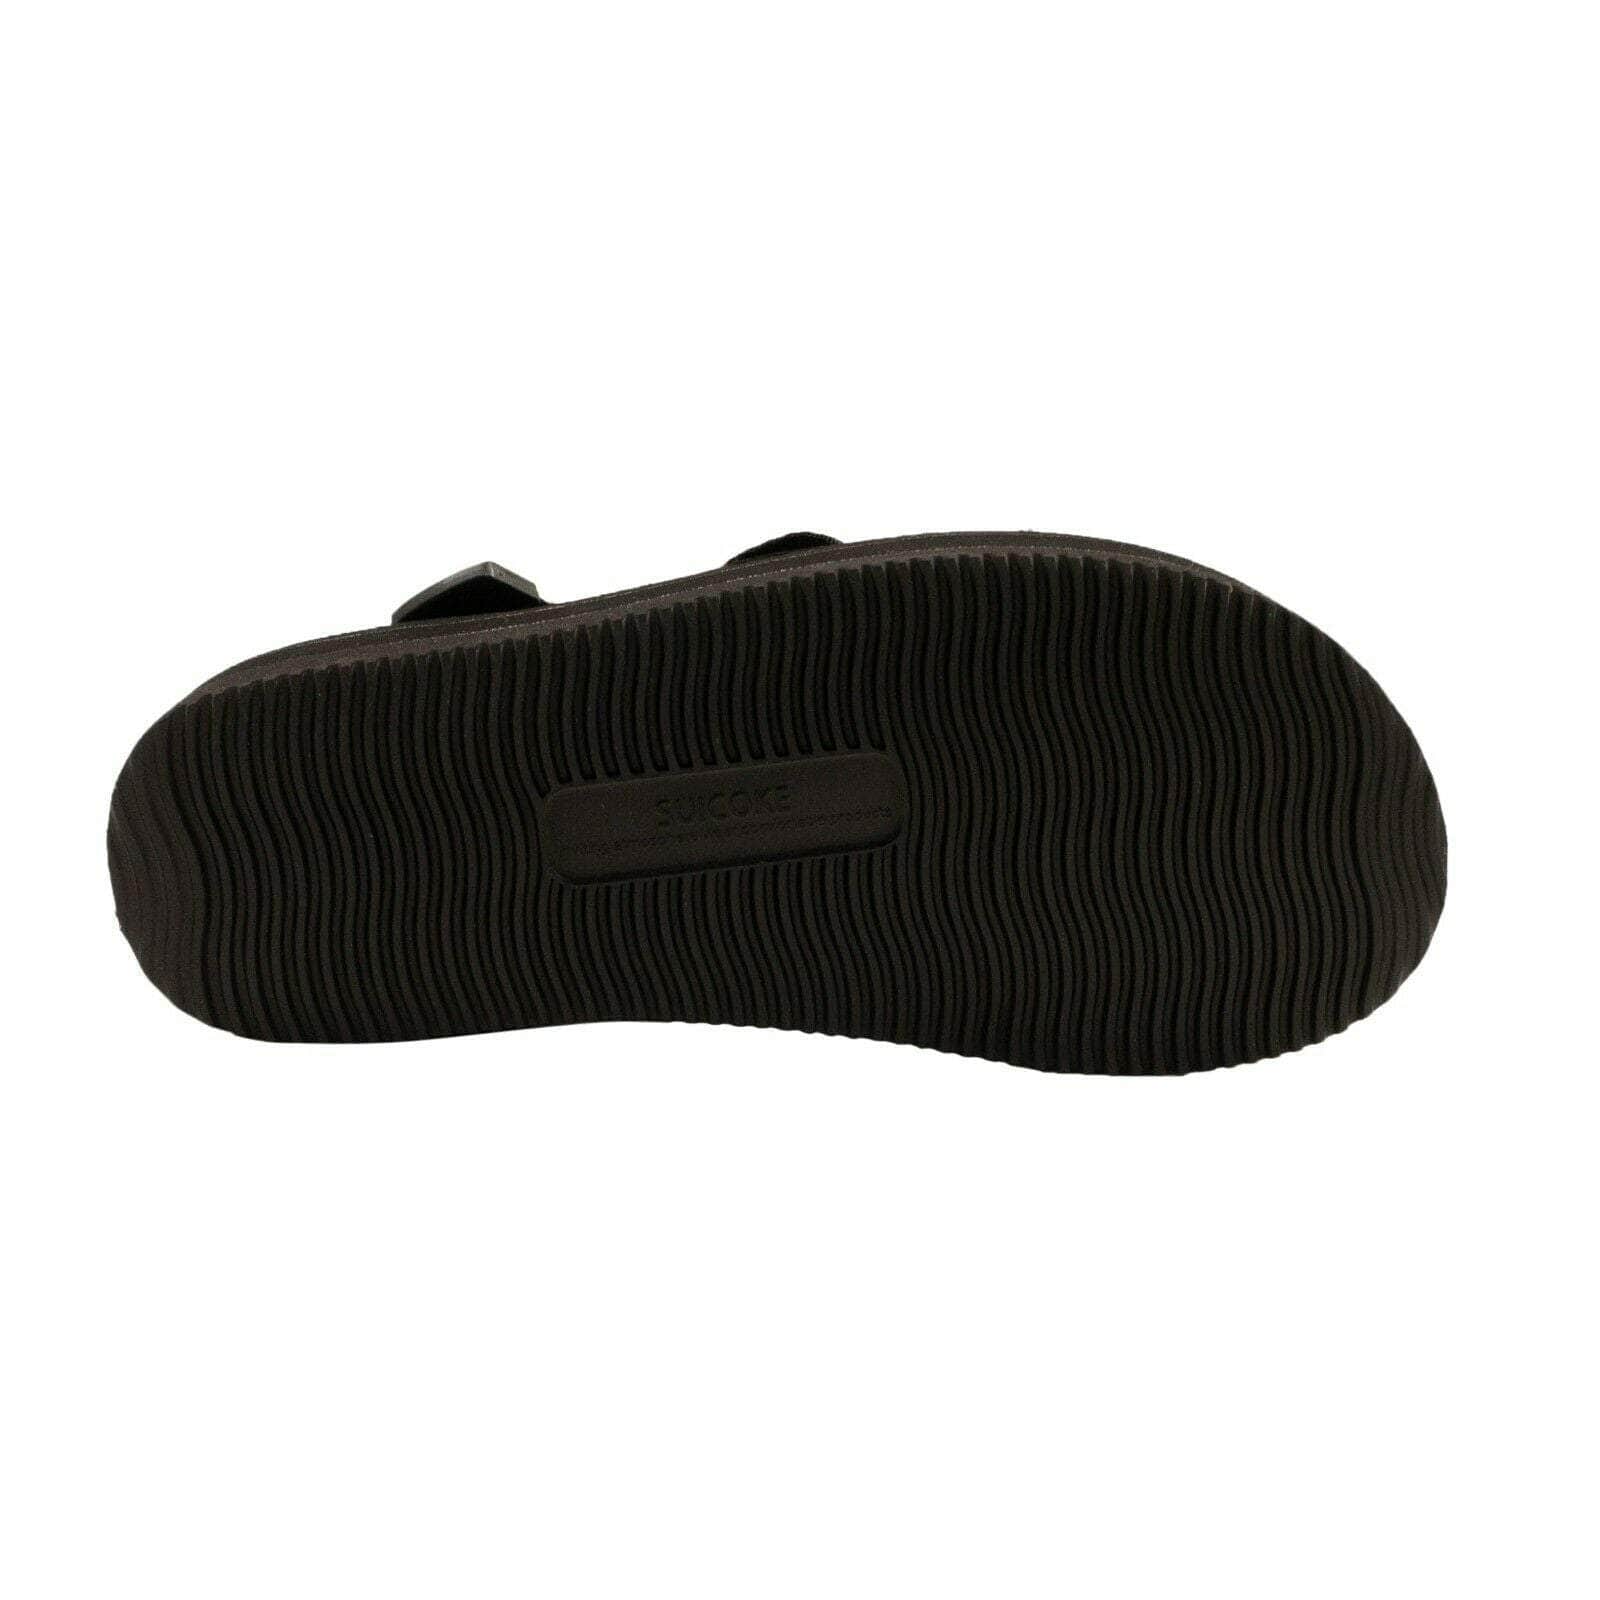 Chaco Women's Sandals Size 7 - Gem